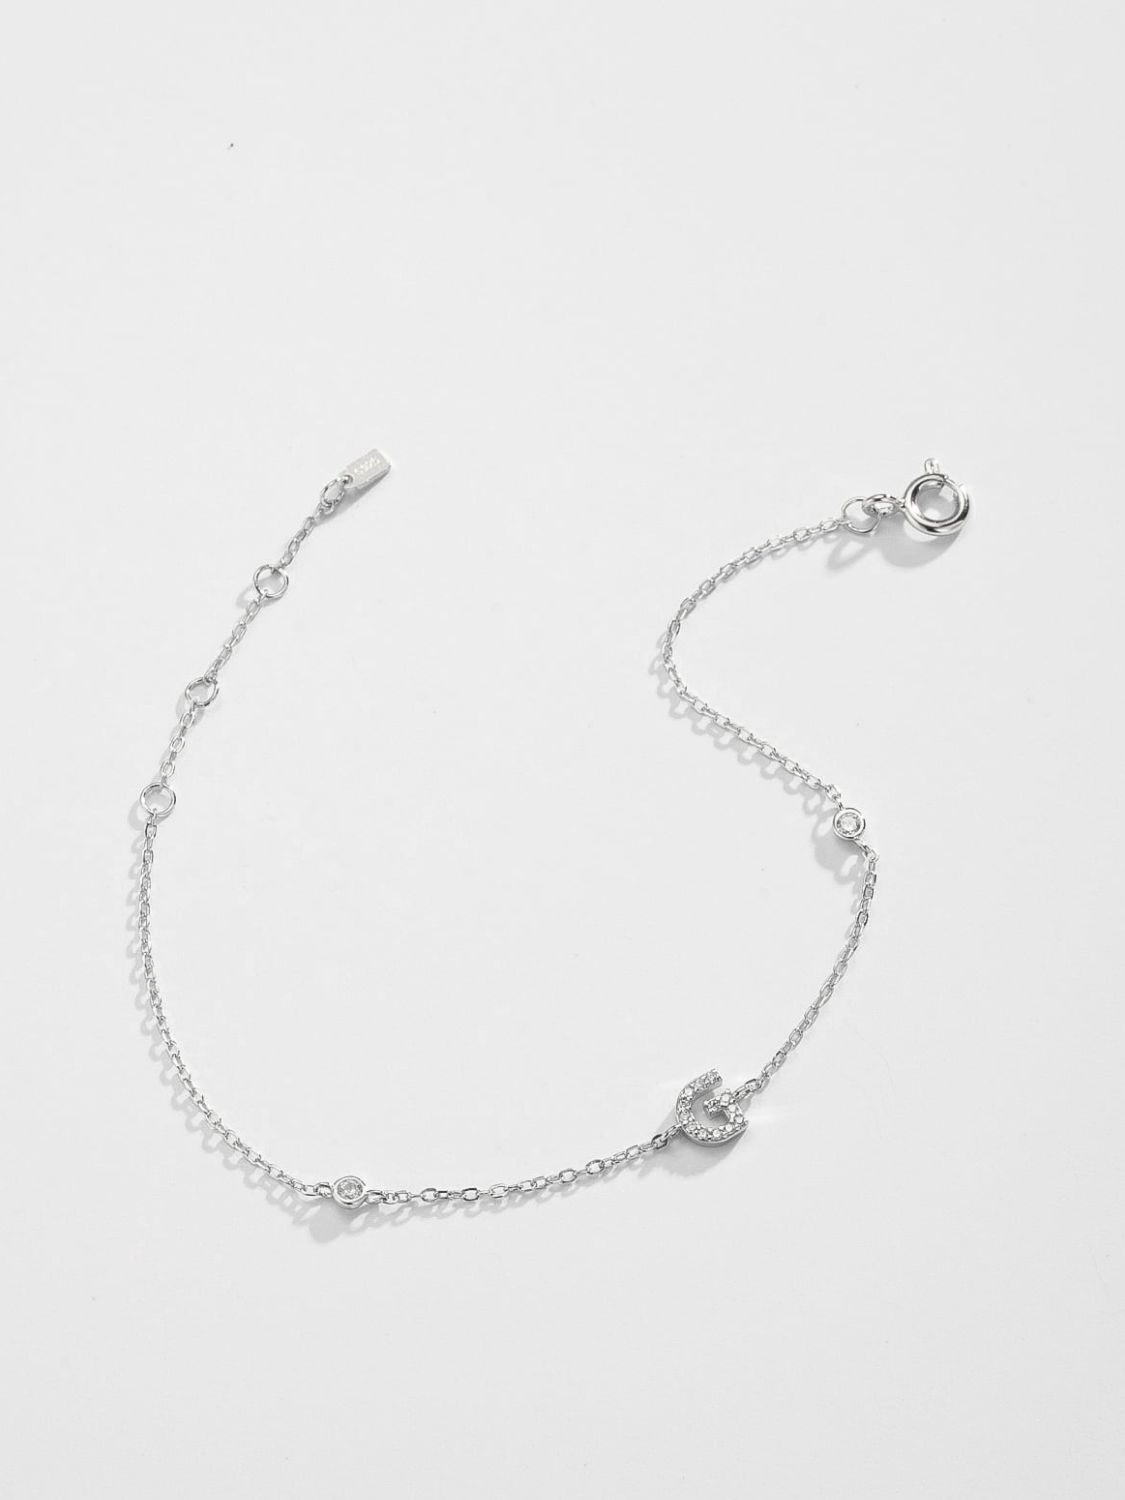 G To K Zircon 925 Sterling Silver Bracelet - GemThreads Boutique